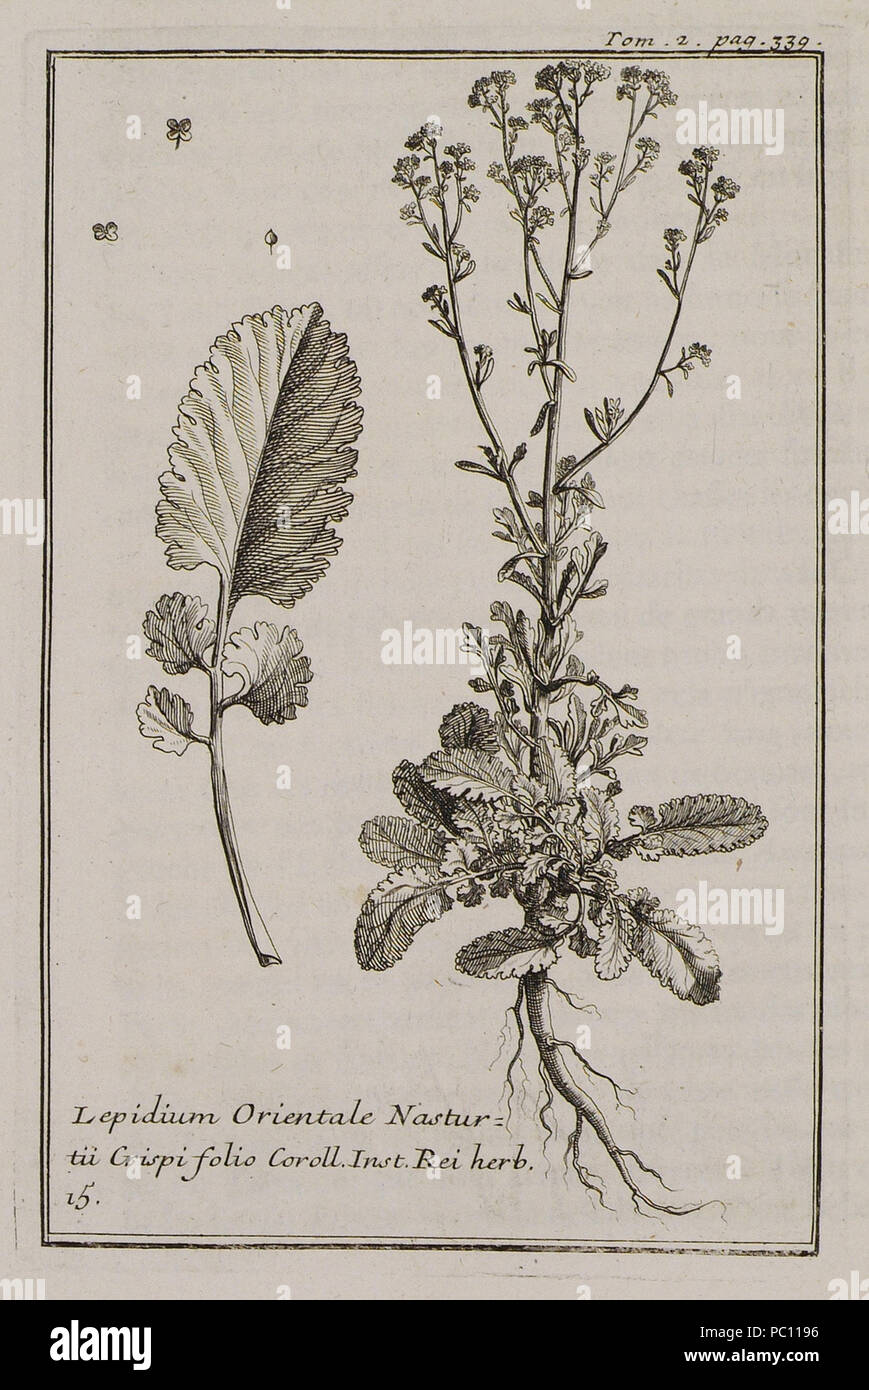 368 Lepidium Orientale Nasturtii Crispi folio Coroll Inst Rei herb 15 - Tournefort Joseph Pitton De - 1717 Stock Photo